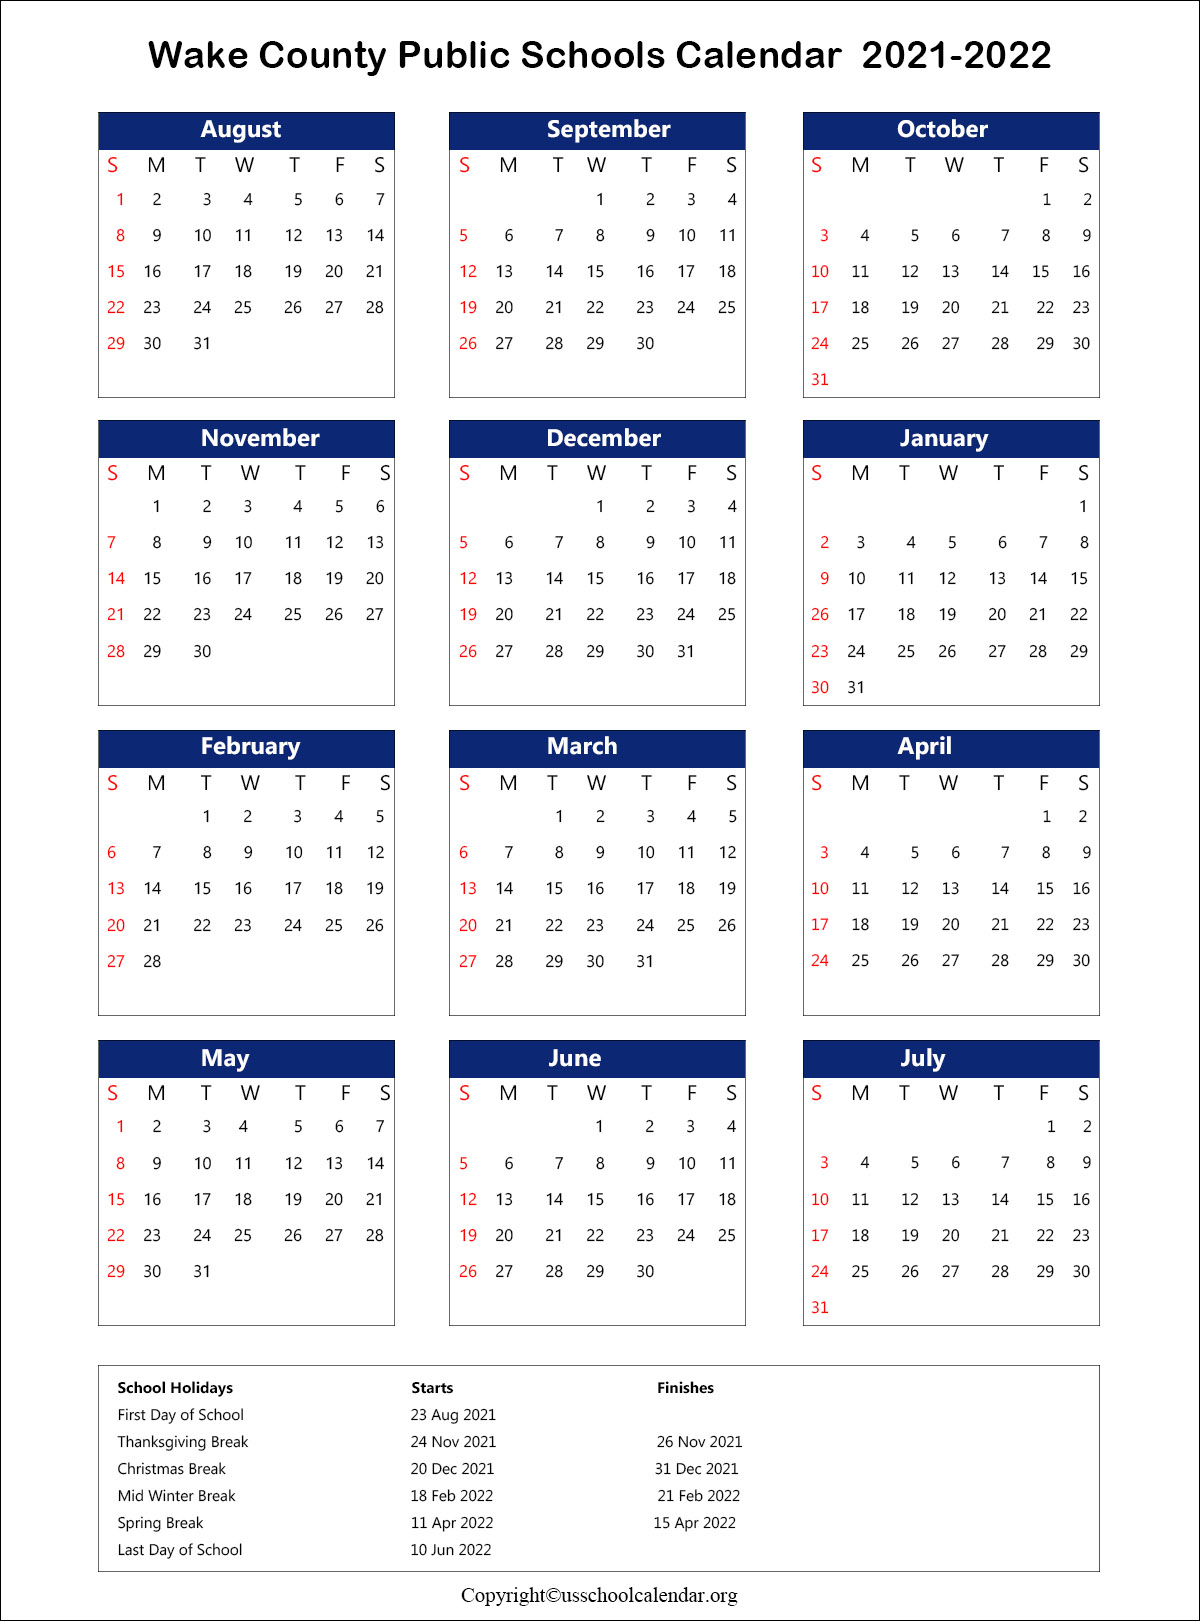 Wake County School Calendar with holidays 20212022